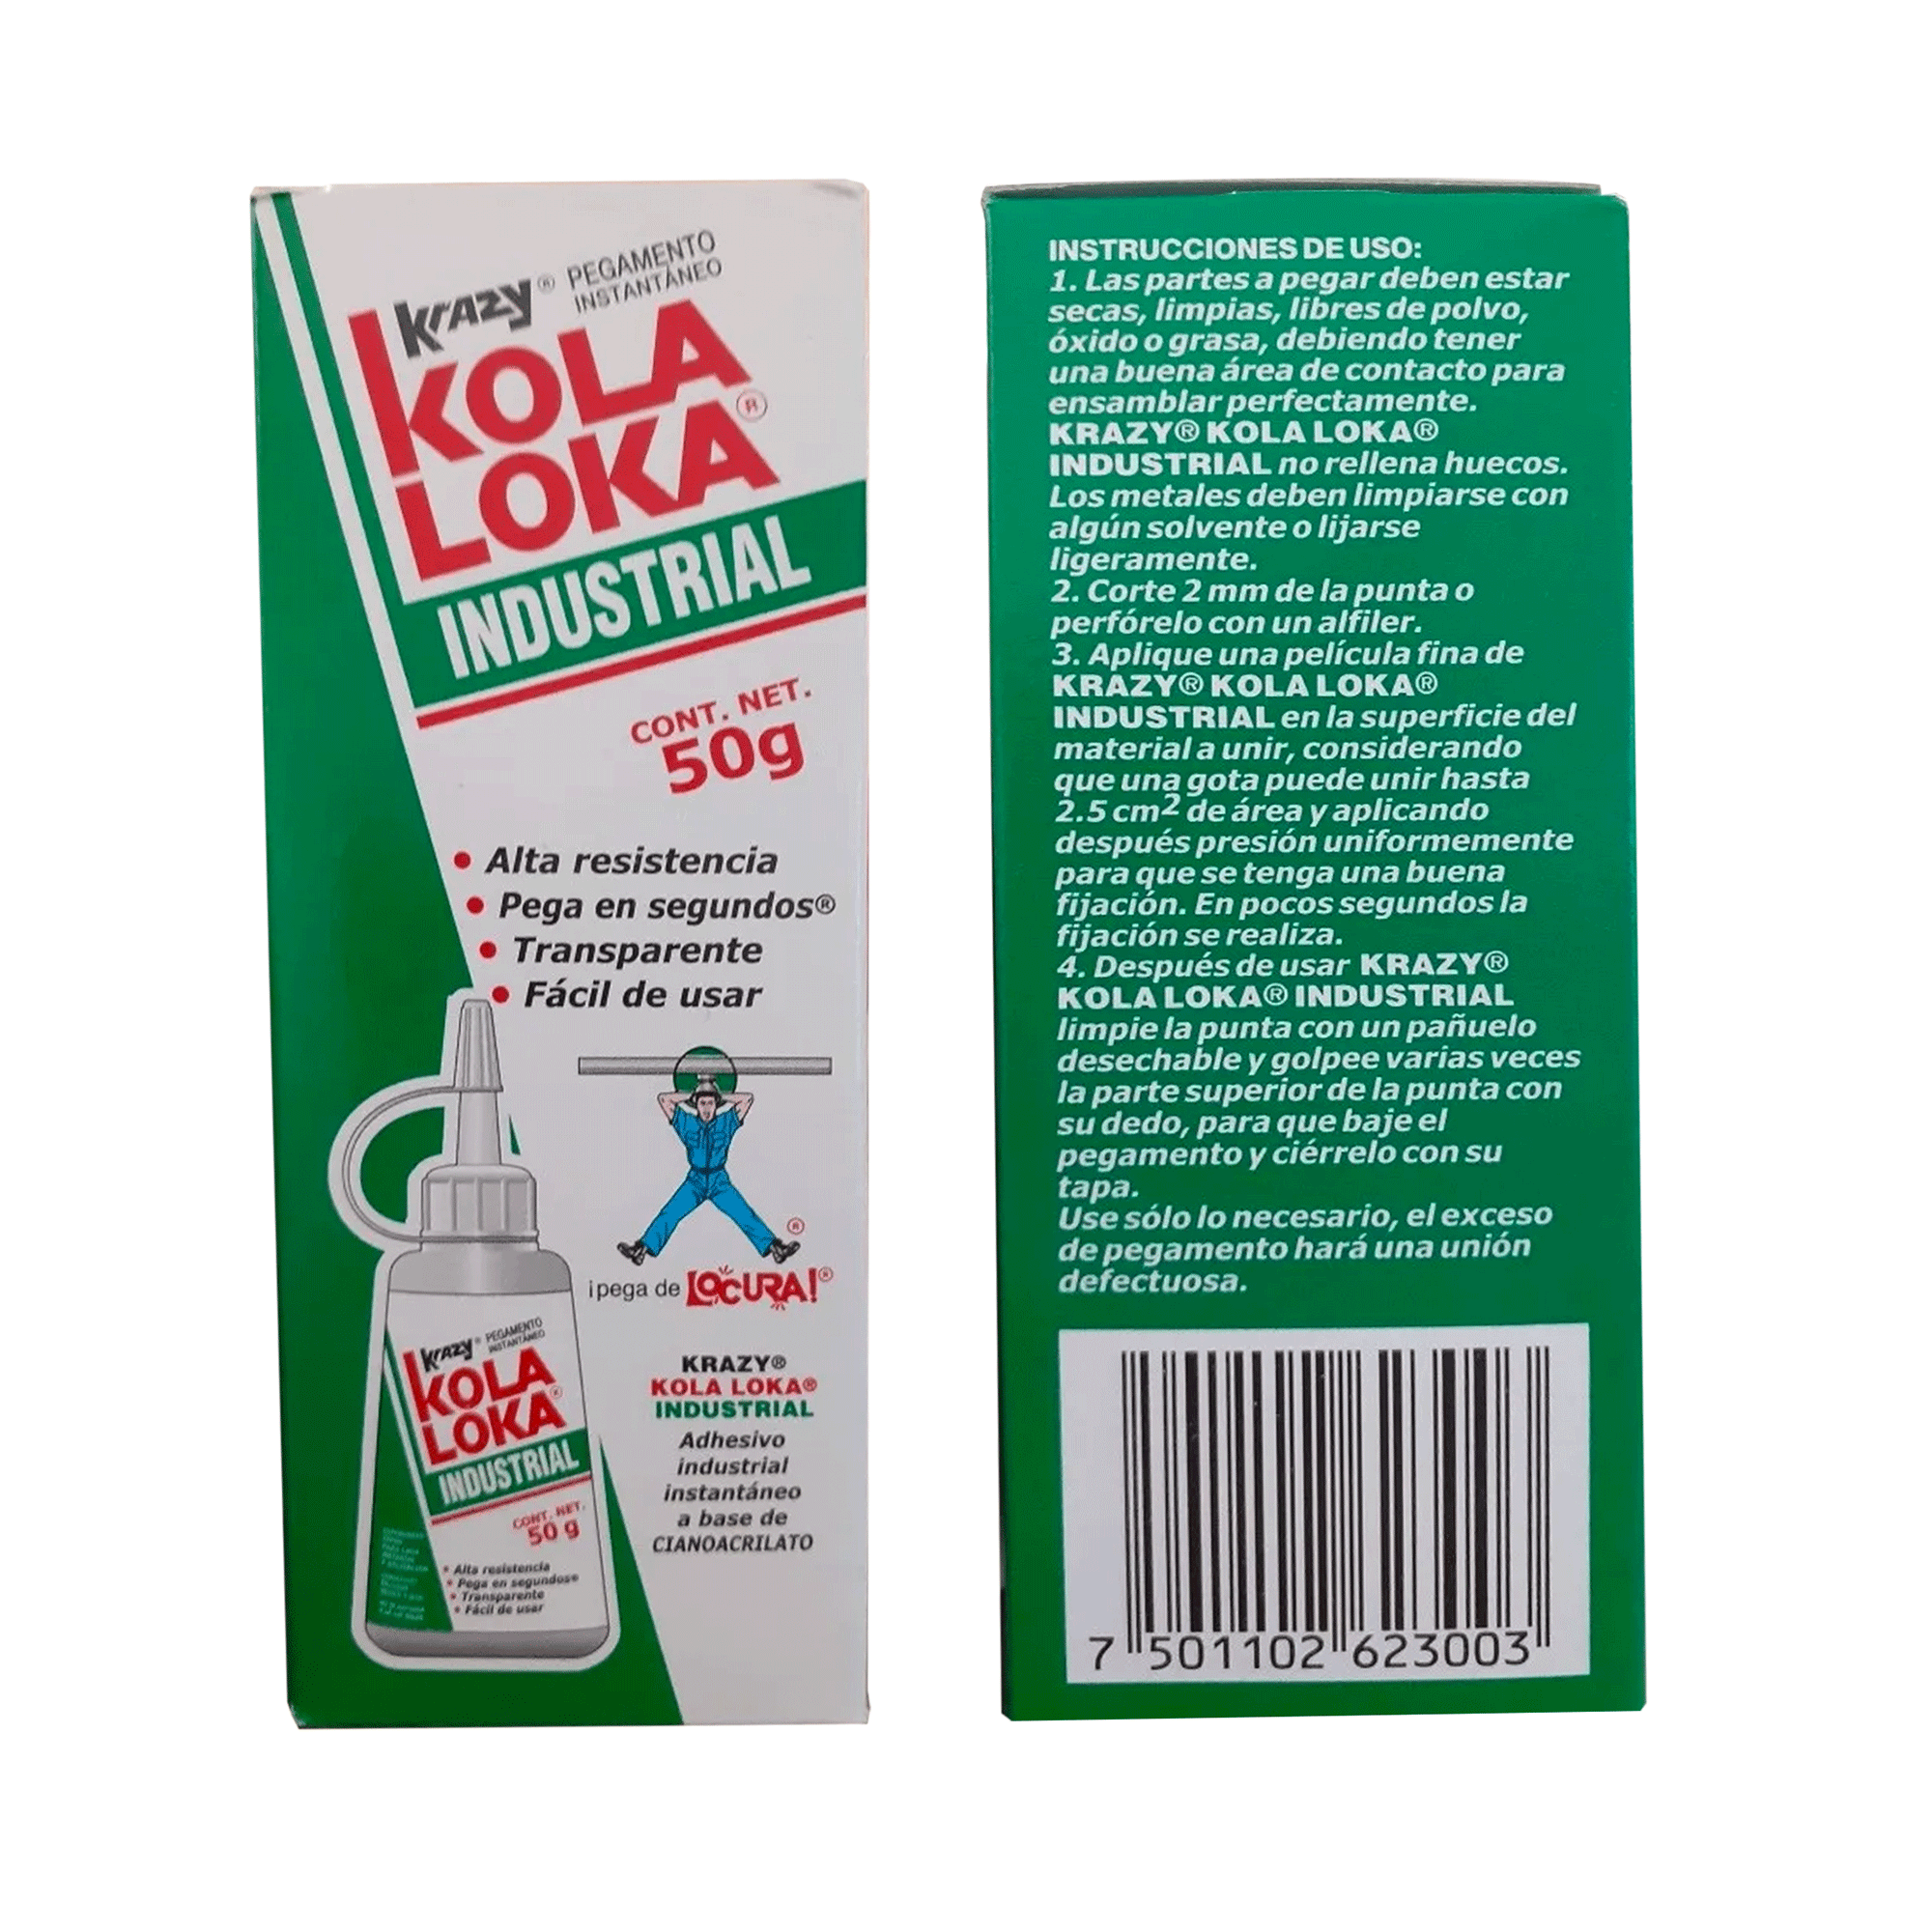 Pegamento instantáneo Kola Loka pack con 11 pzs.